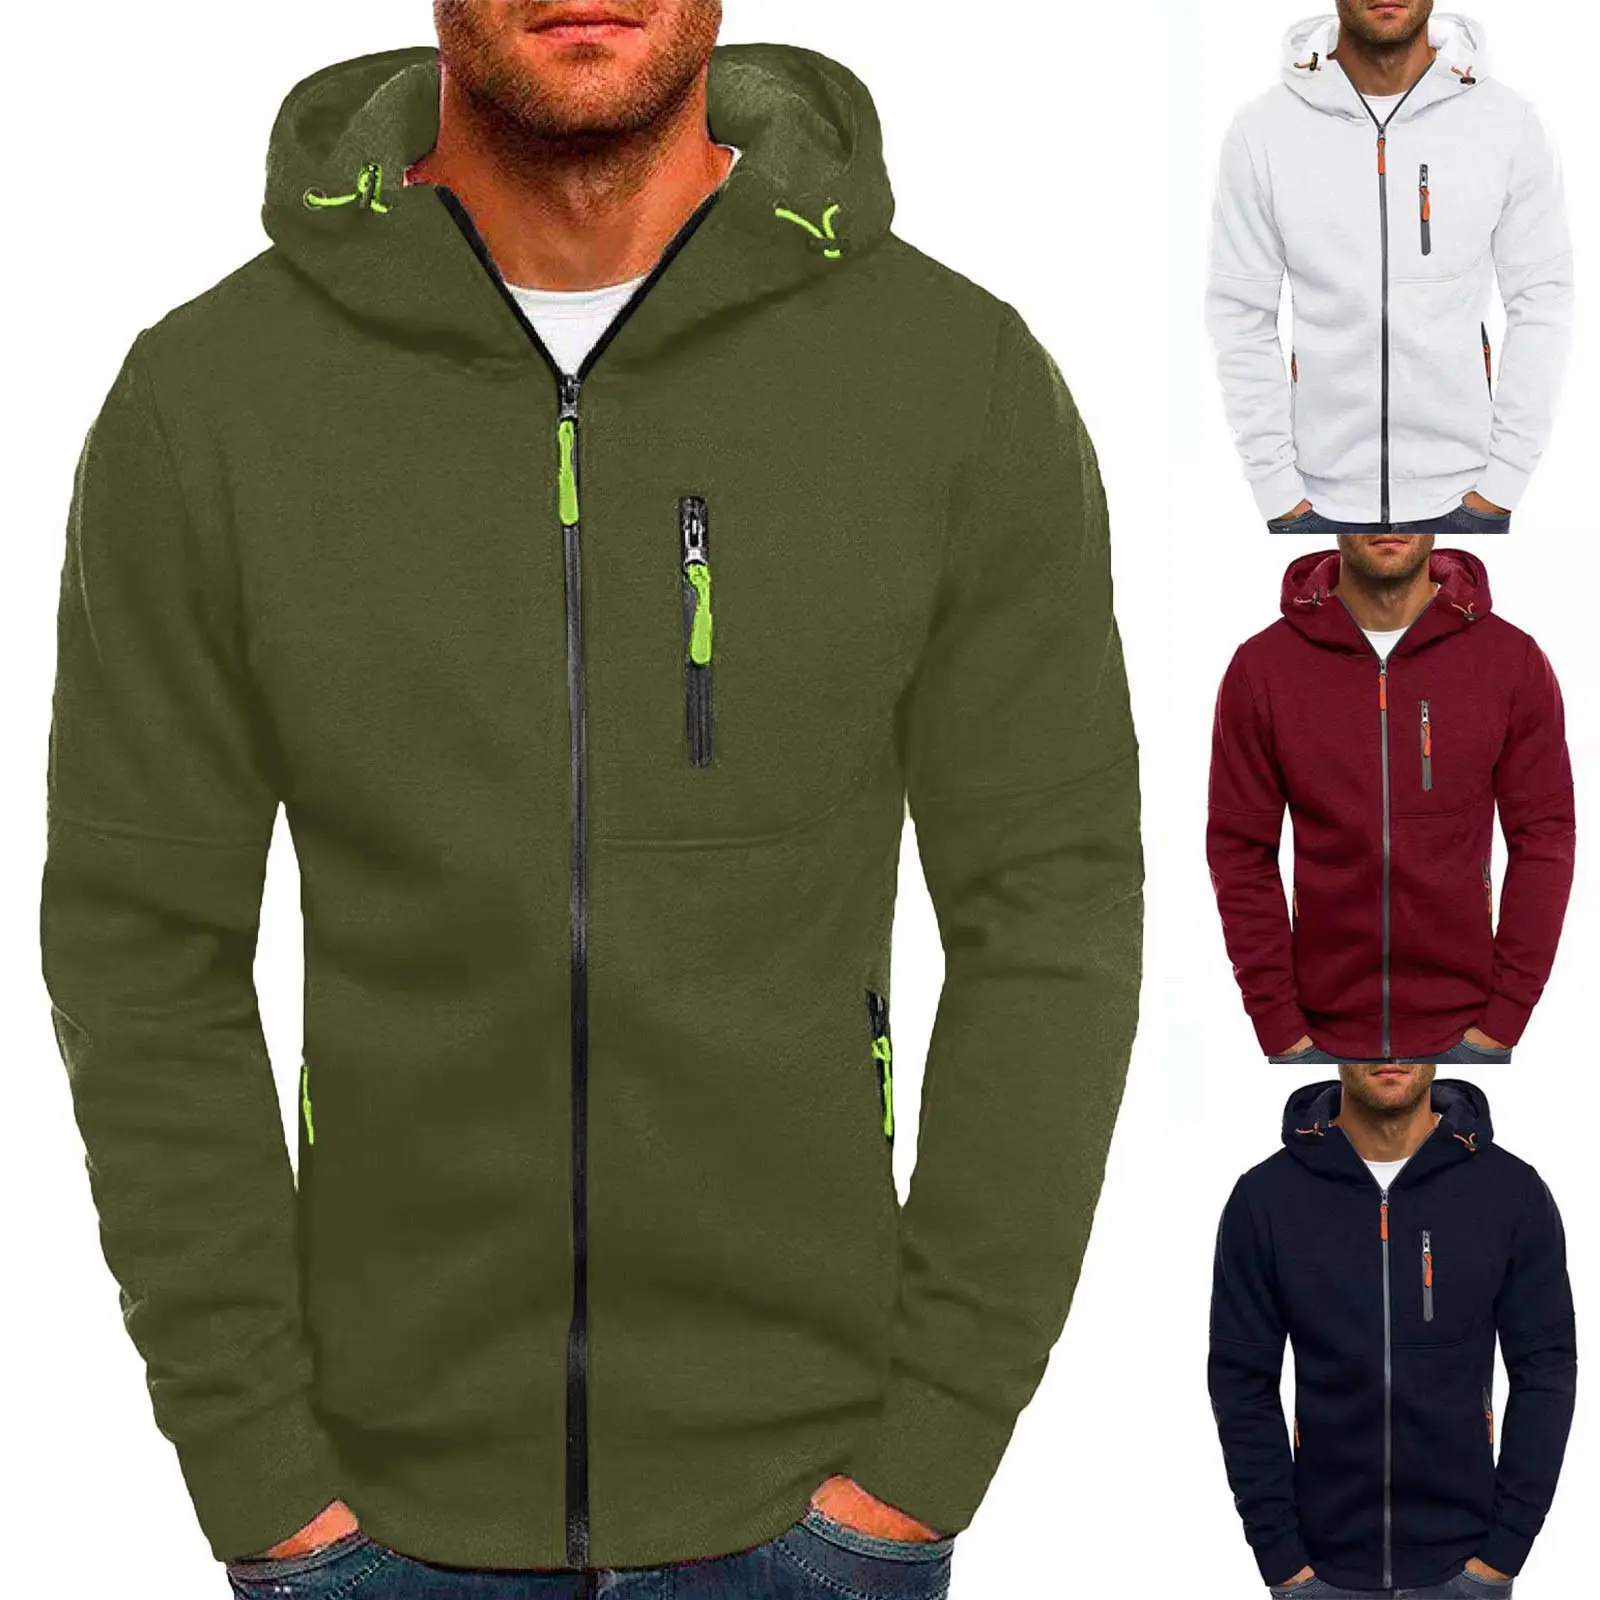 Autumn Men's Casual Jackets Hooded Coats Zipper Sweatshirts Mens Sport Fashion Jacket Mens Clothing Outerwear